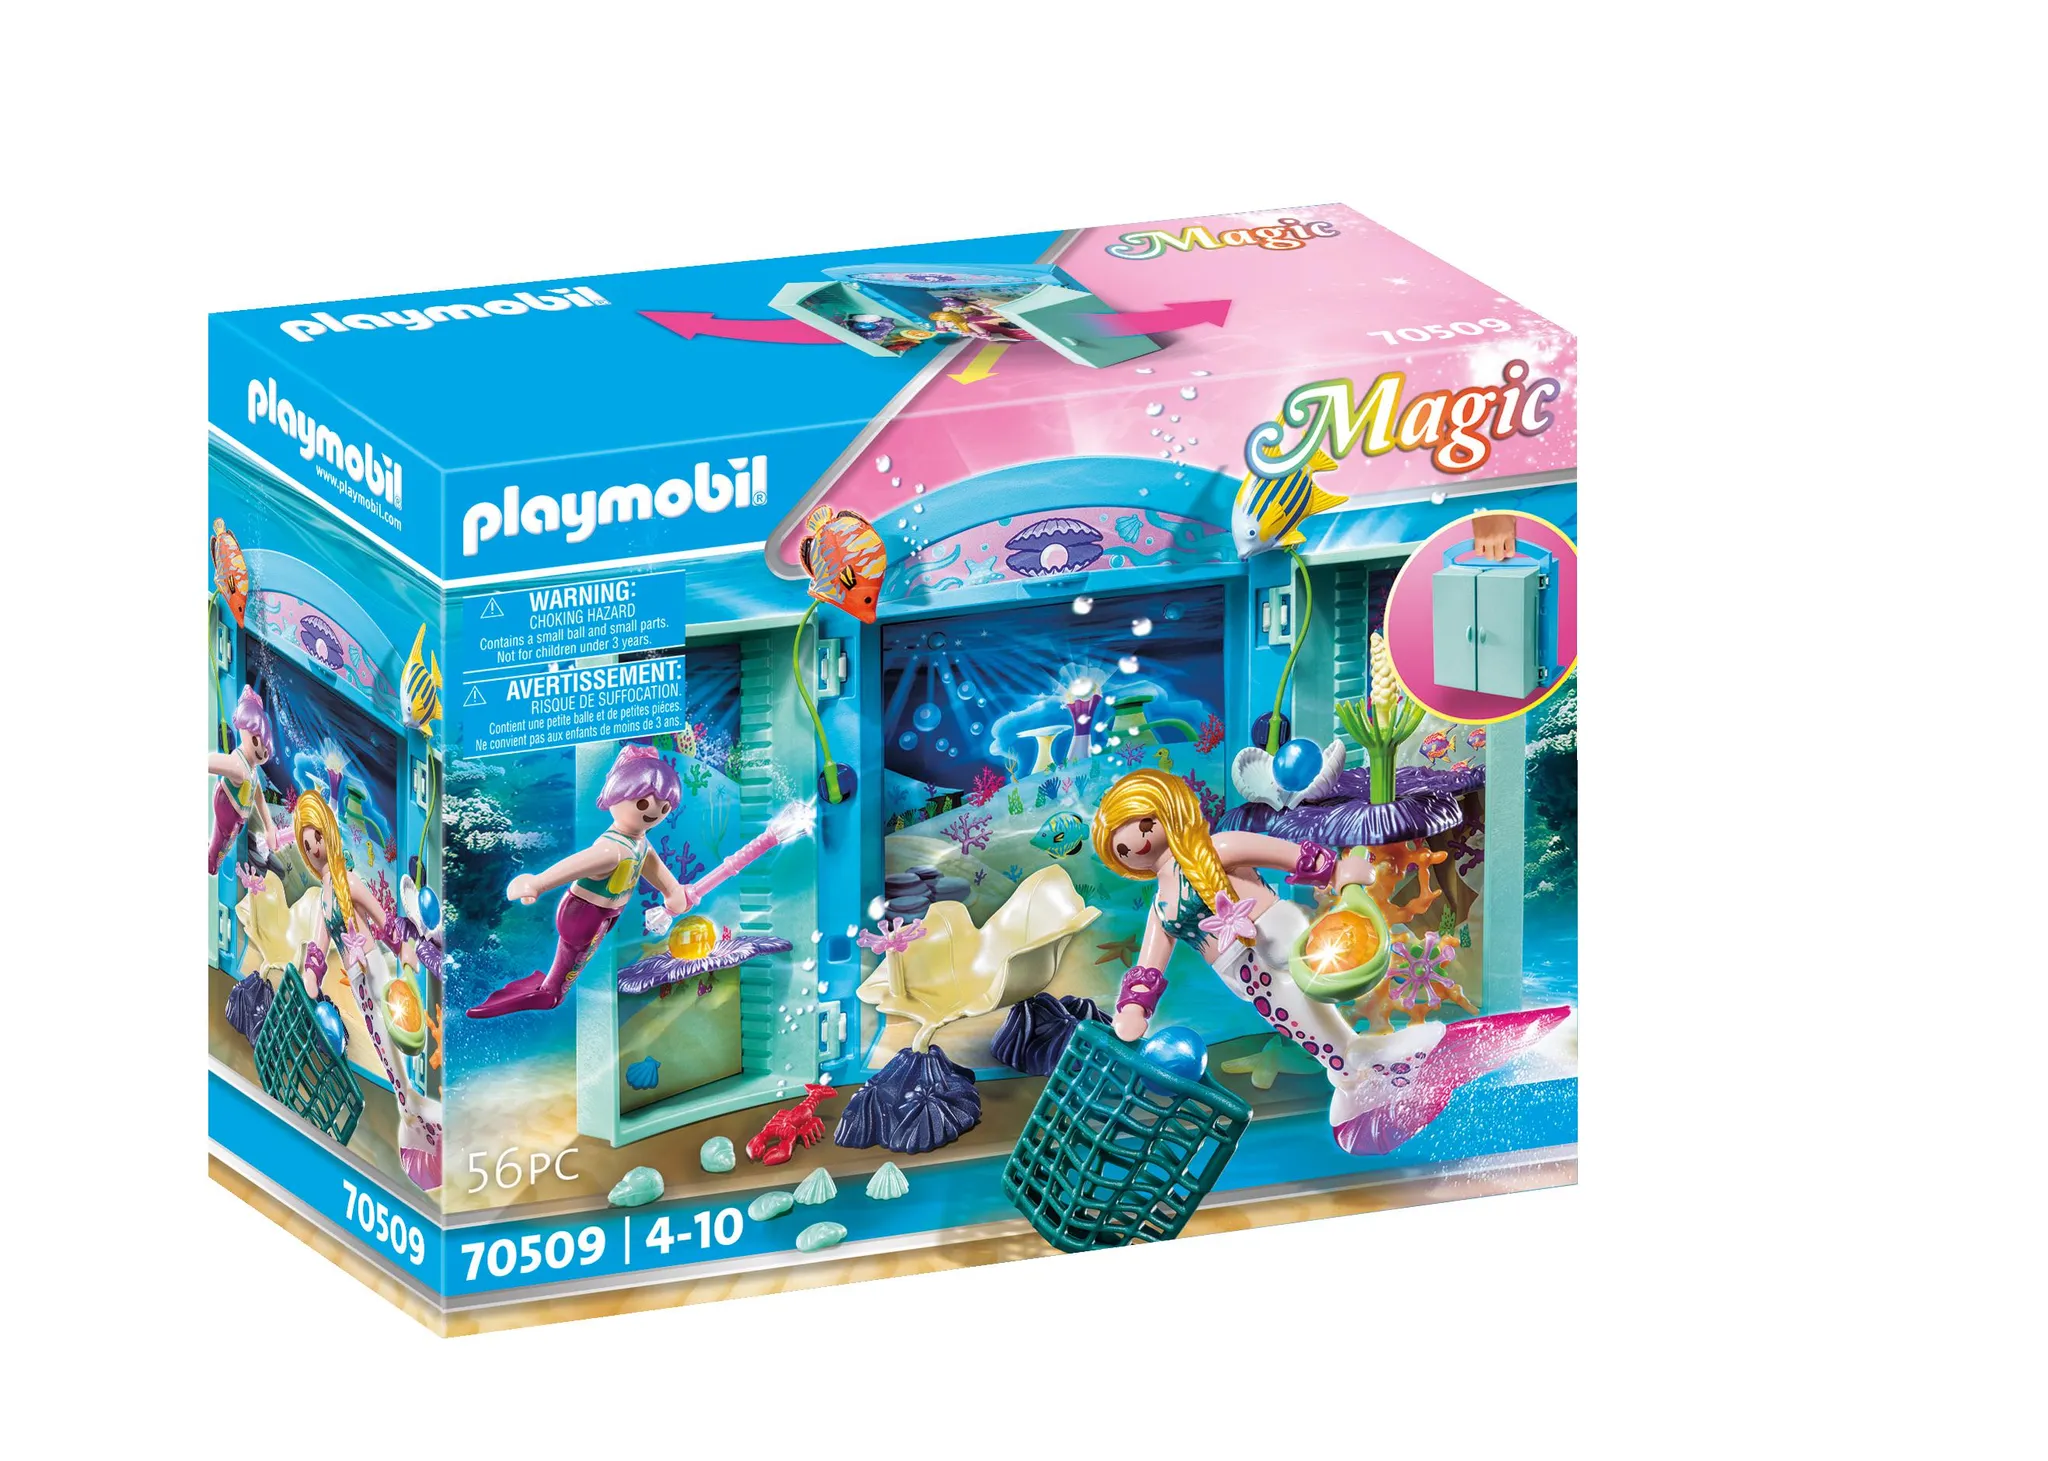 PLAYMOBIL 70509 Spielbox "Meerjungfrauen"